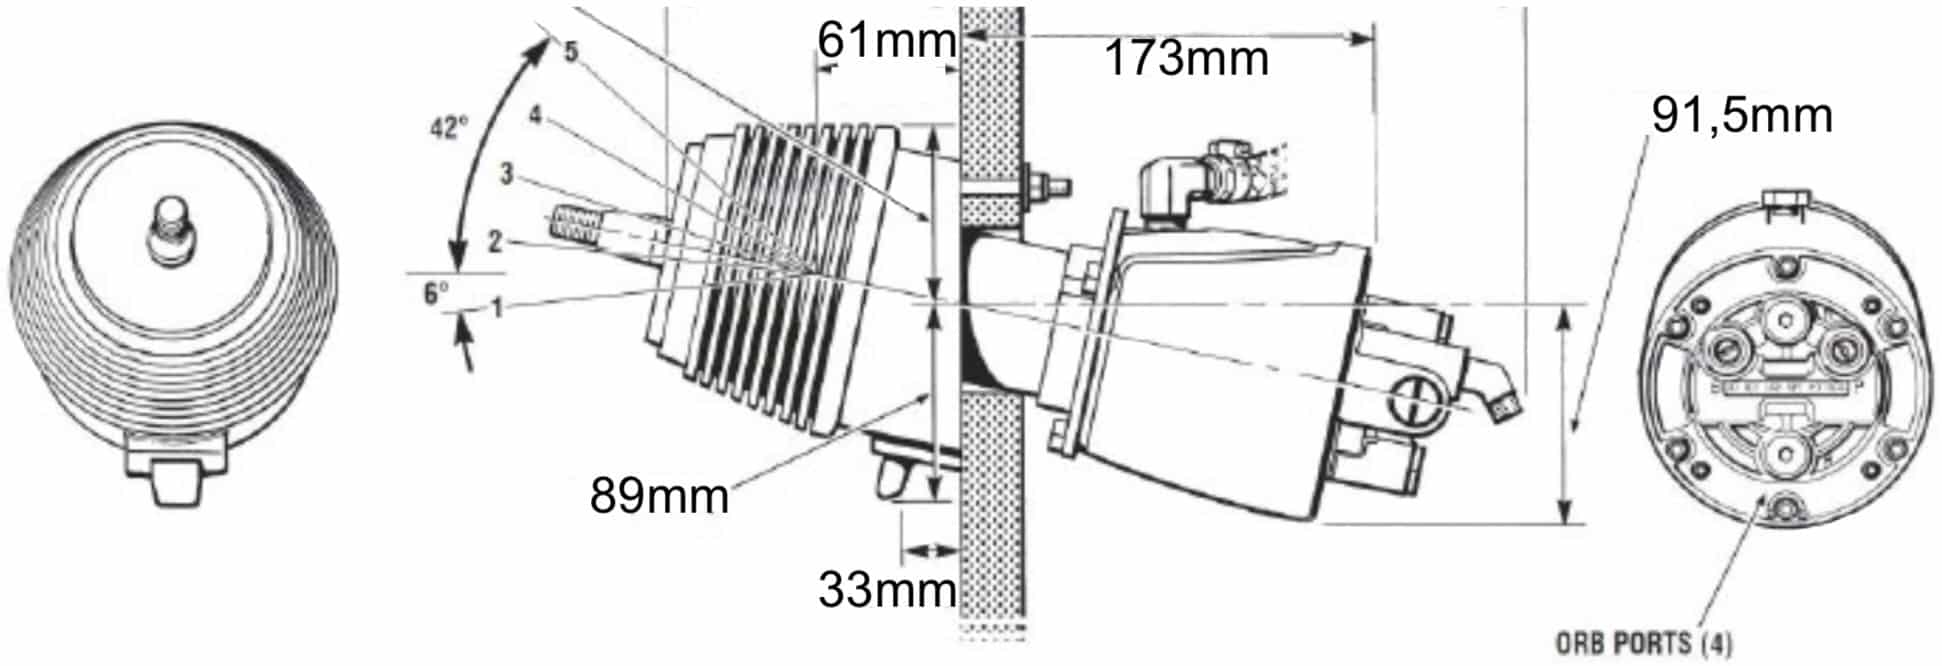 Pompe hydraulique Seastar Sport Tilt à soufflet